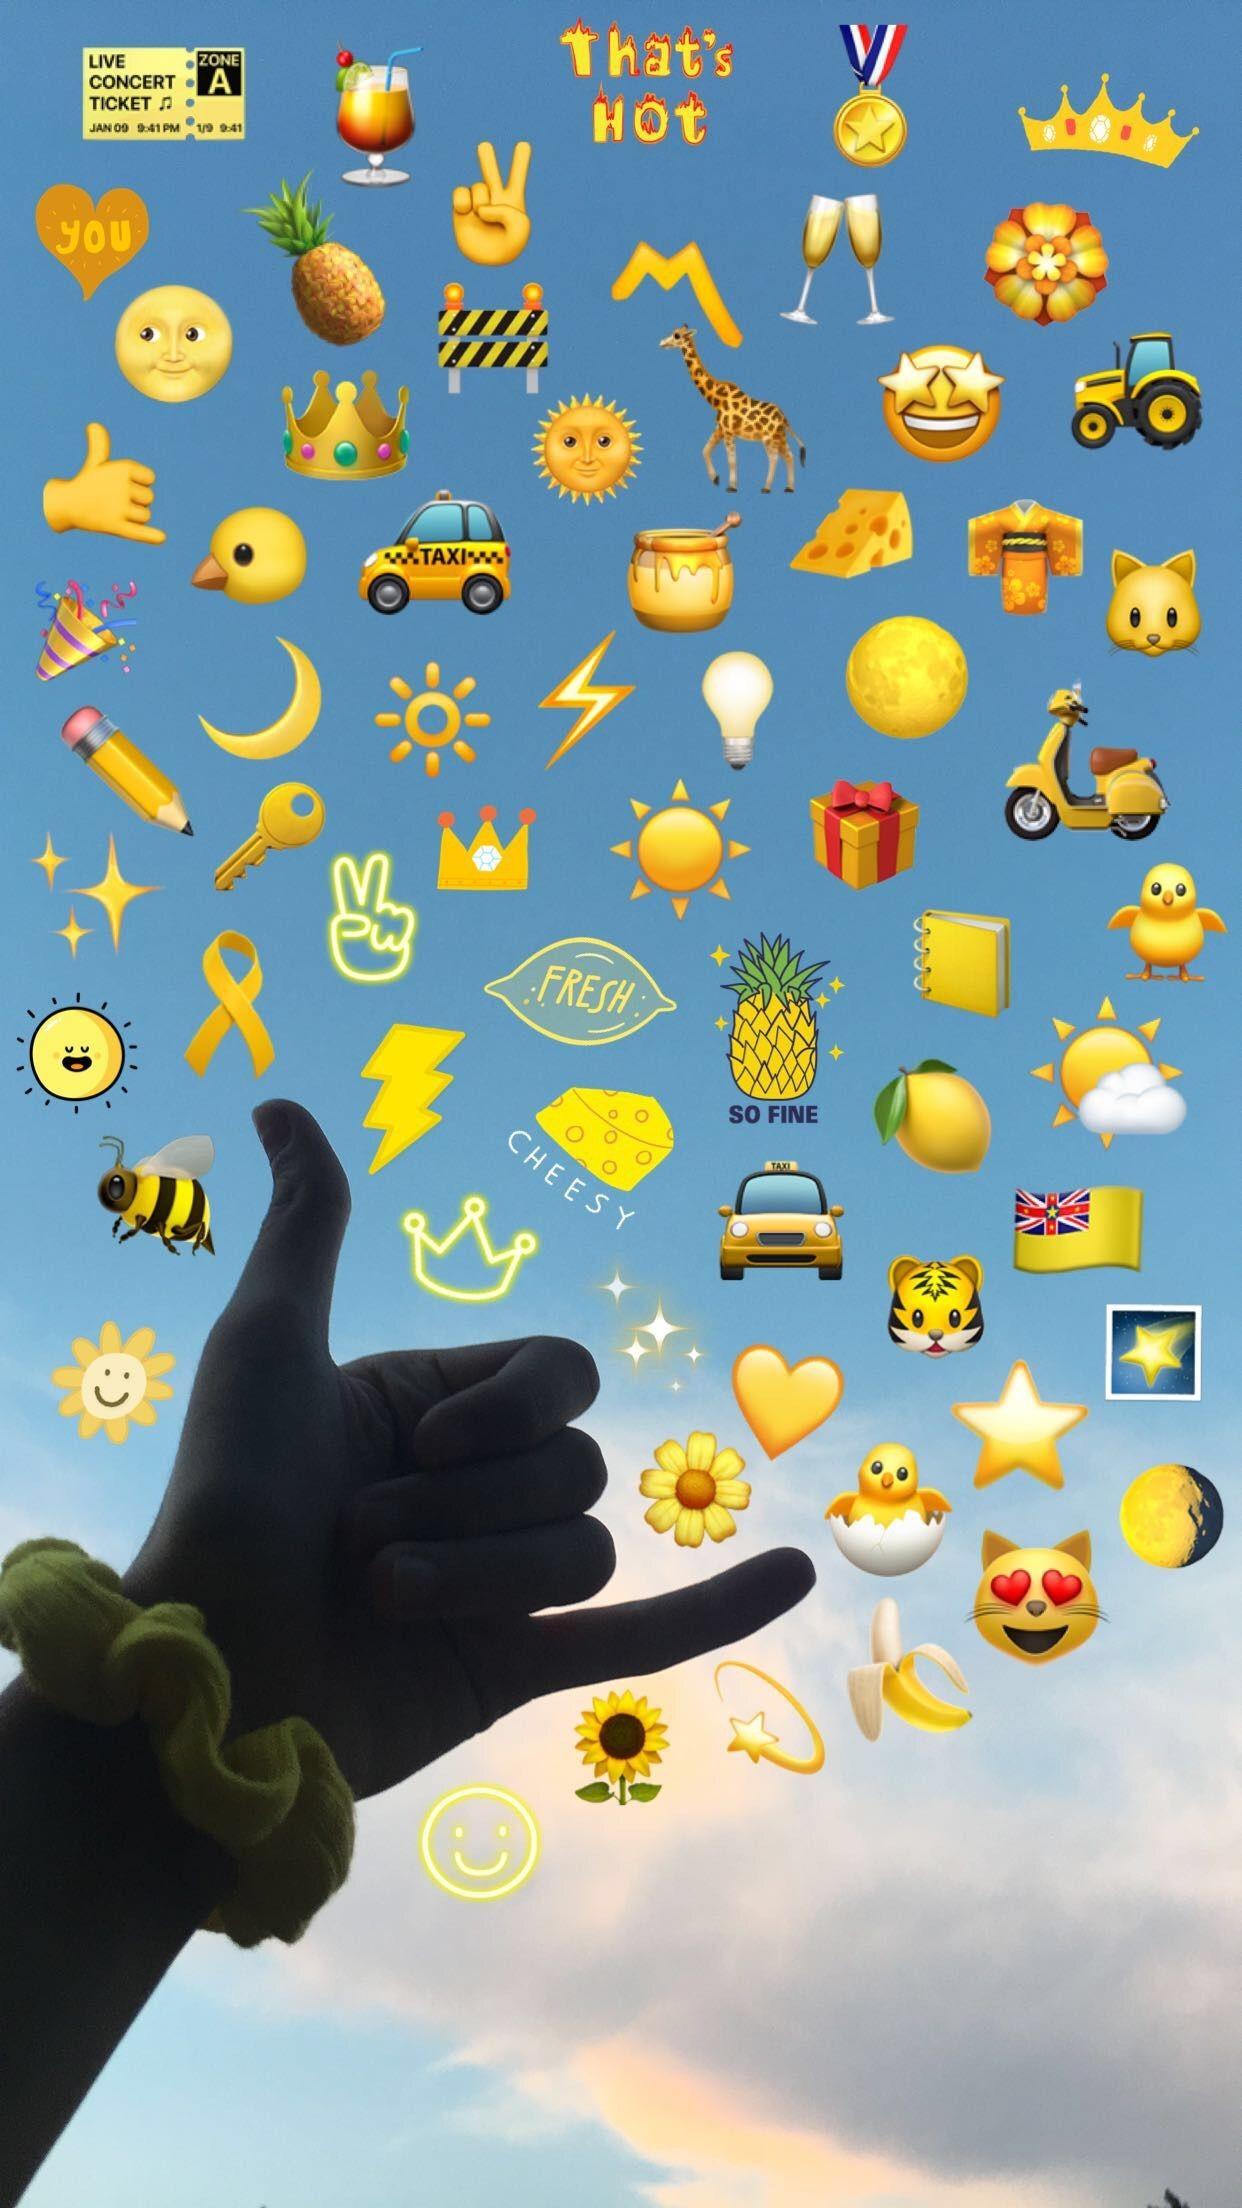 Sad Emojis Wallpapers - Wallpaper Cave